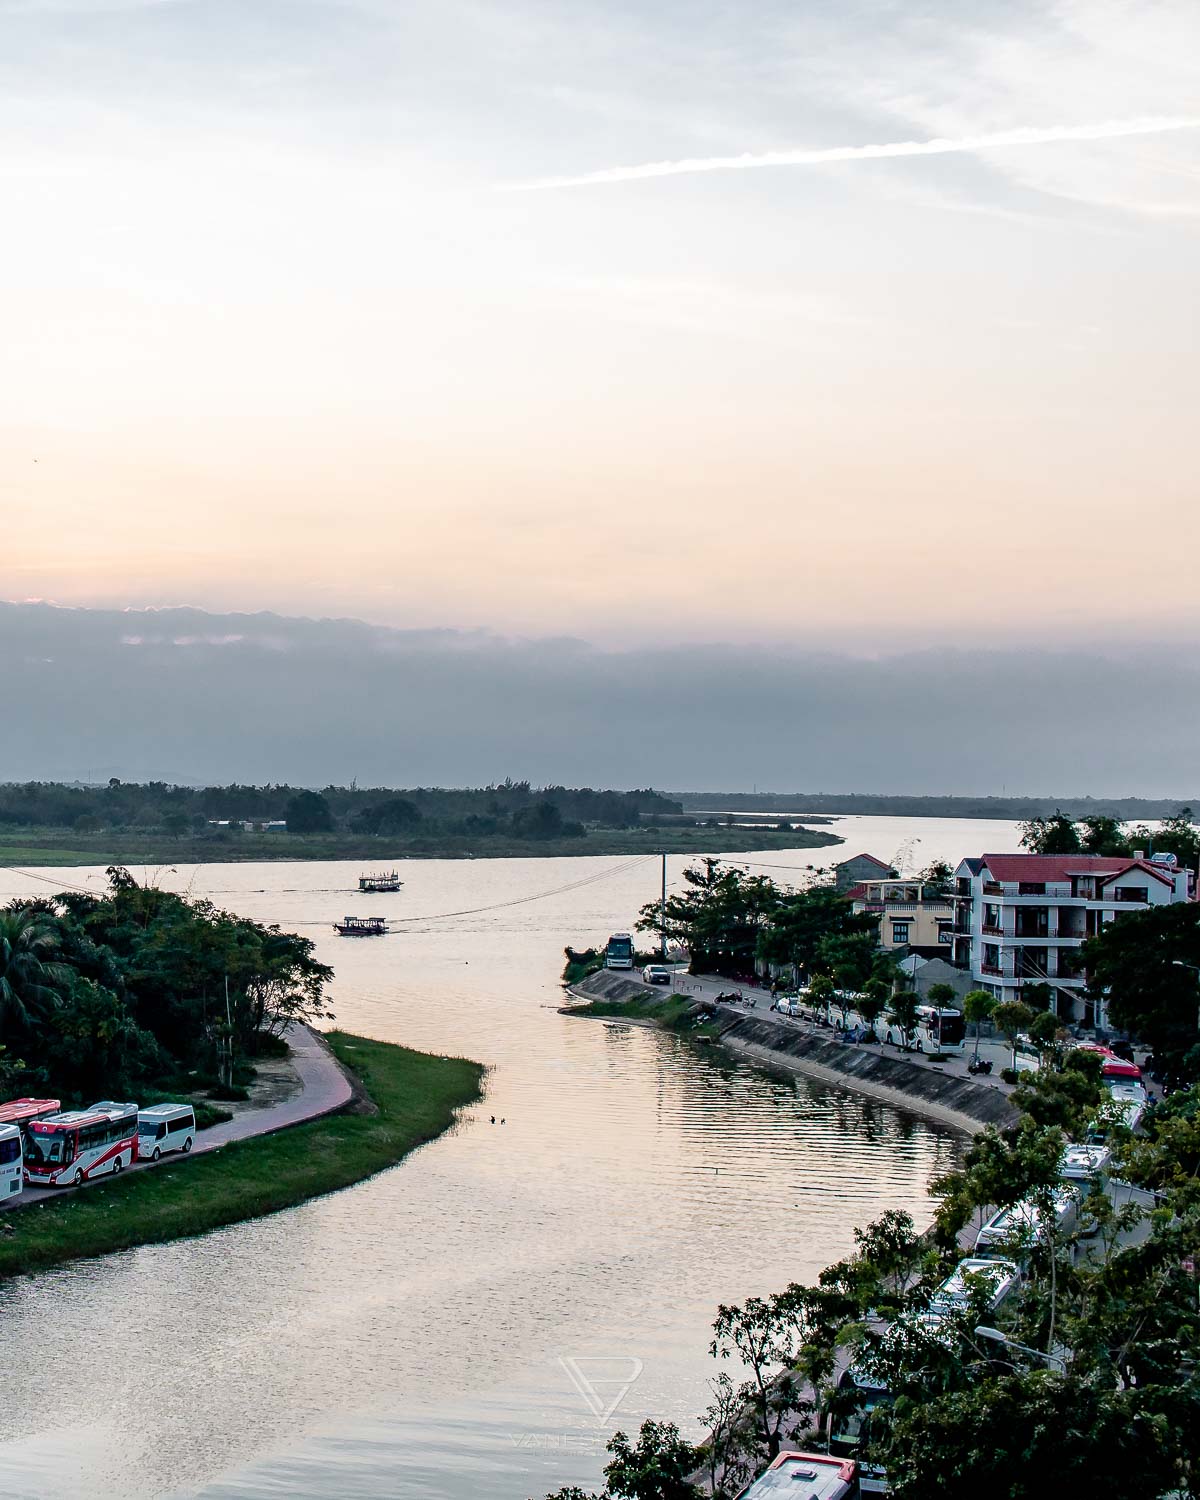 Vietnam sightseeing top 10 - Da Nang region - Travel tips for Vietnam sightseeing top 10 from Da Nang region. Beaches, Hands Bridge Golden Bridge, Marble Mountains, Museum - Scenic Spots Da Nang Hoi An Vietnam - Top10 Must See Places Vietnam - Travel blog Asia